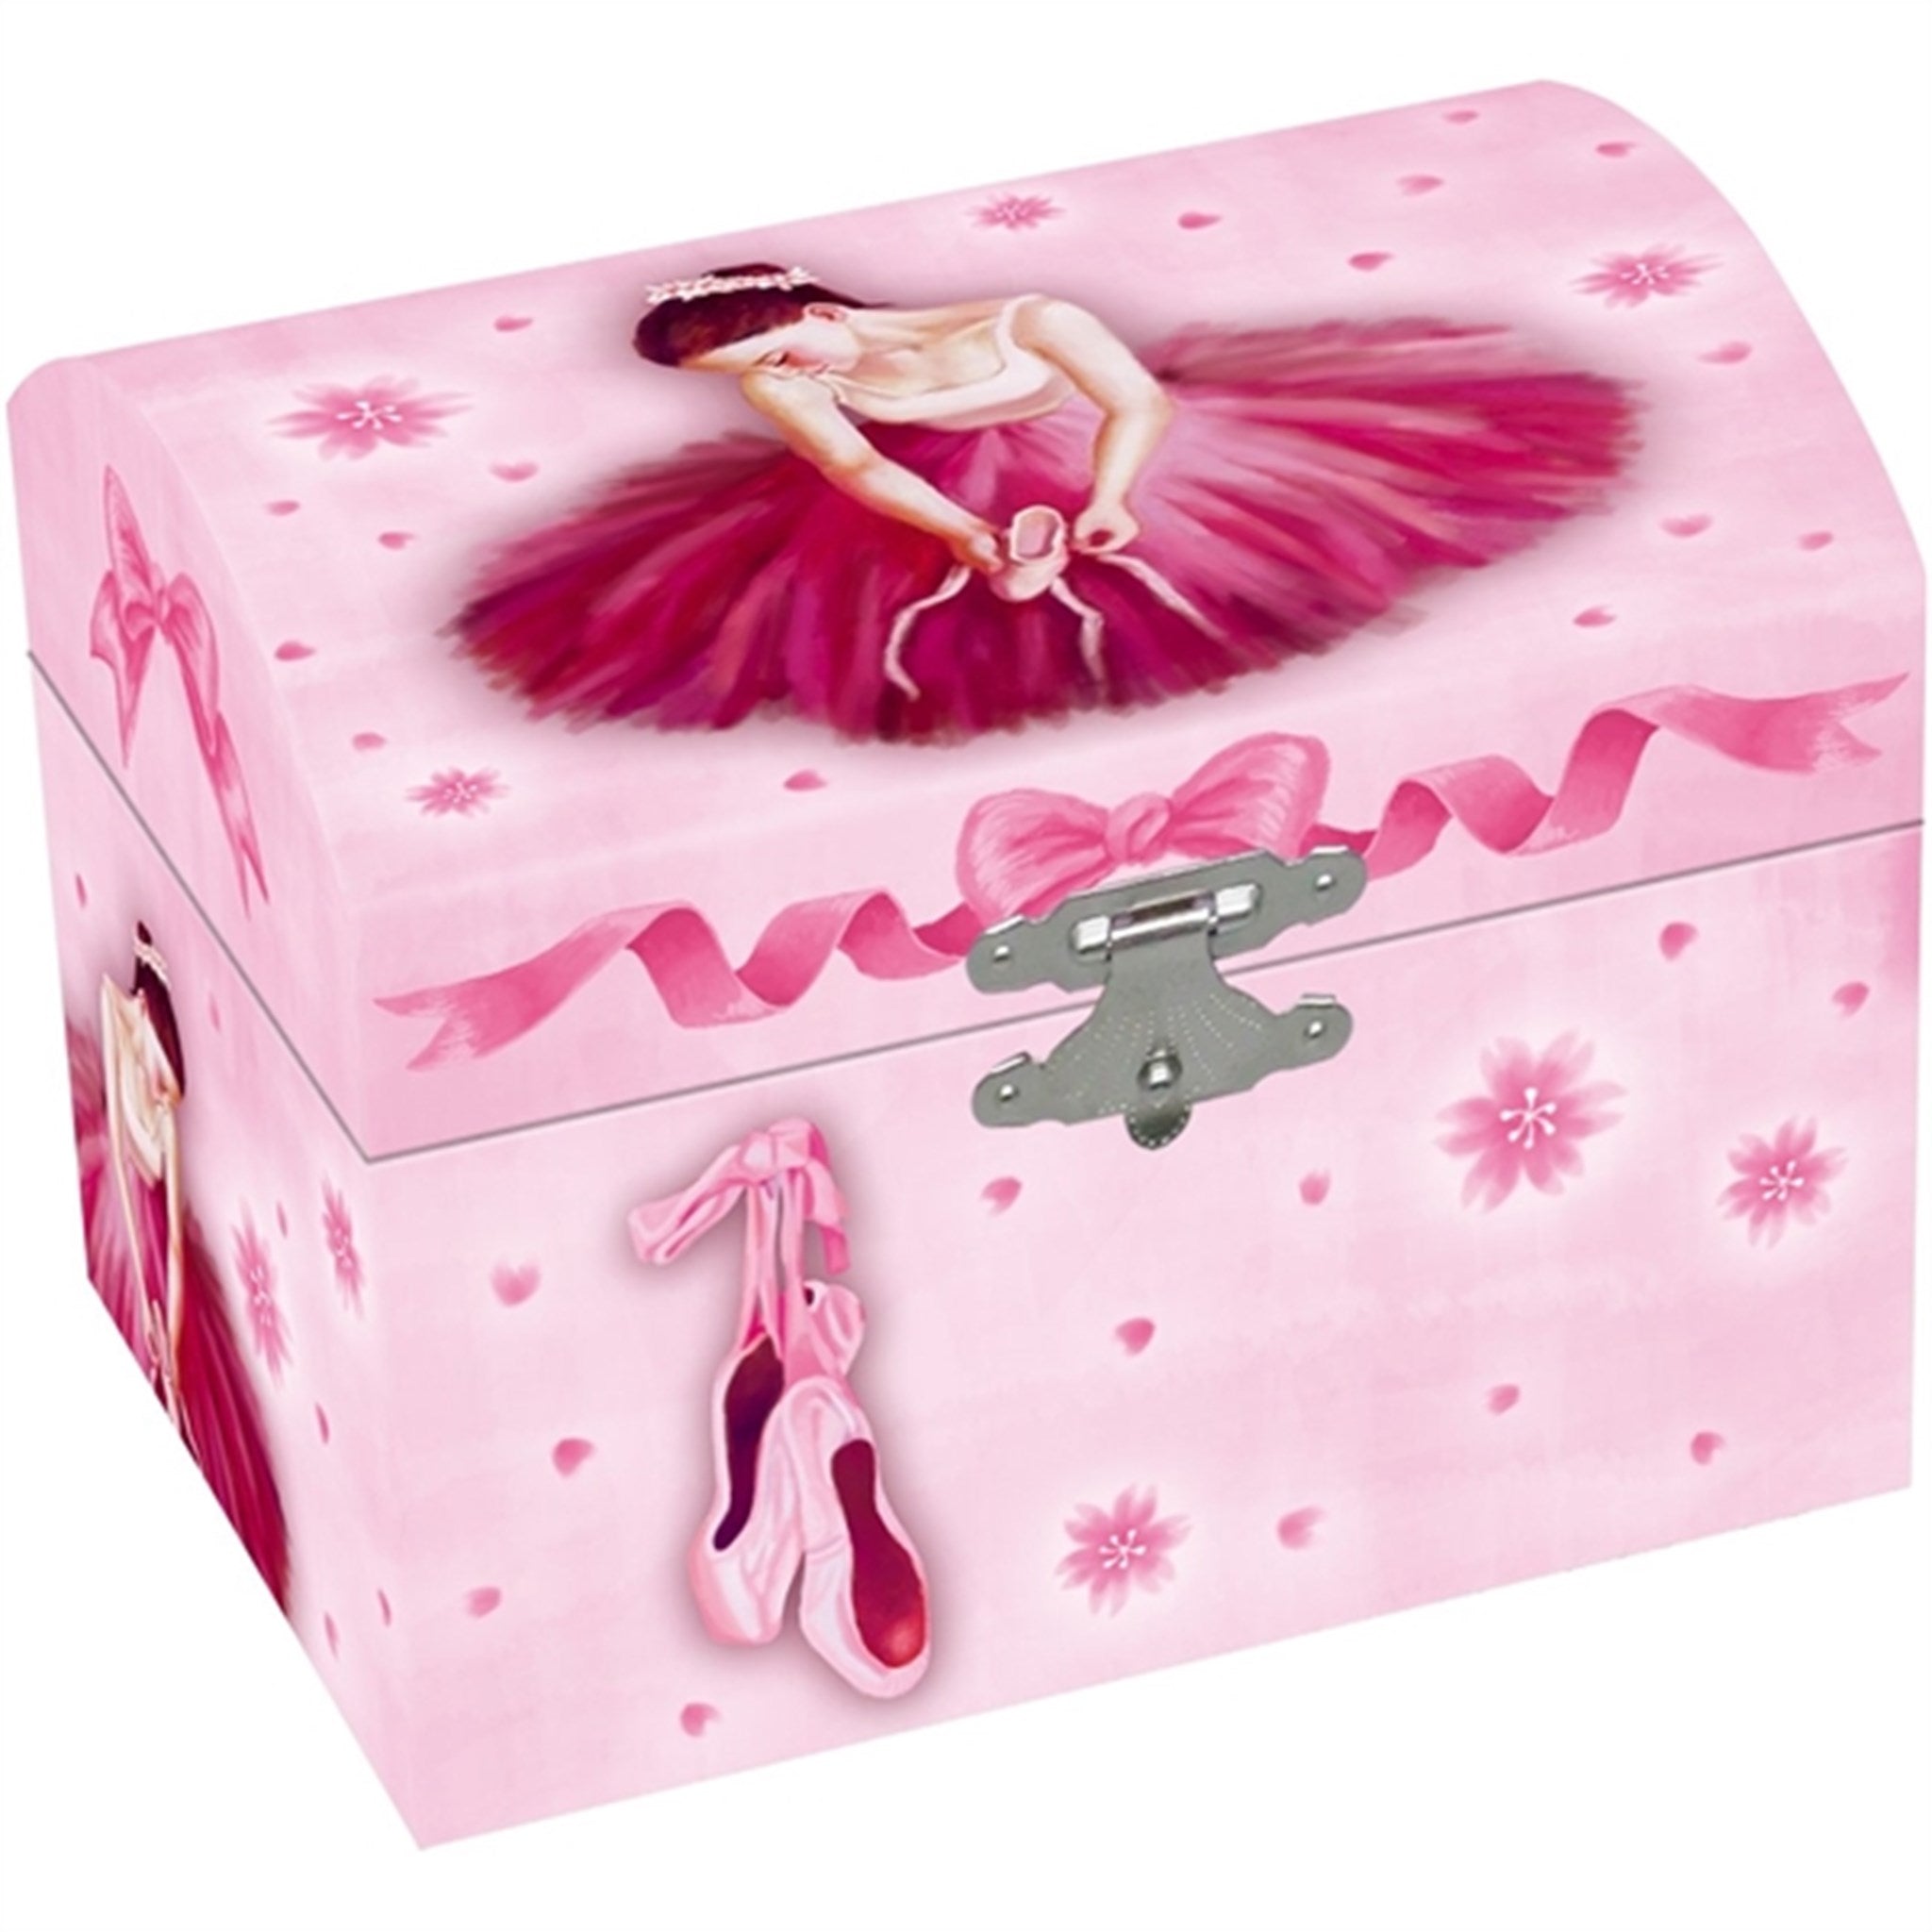 Magni Jewelry Box With Ballerina And Music